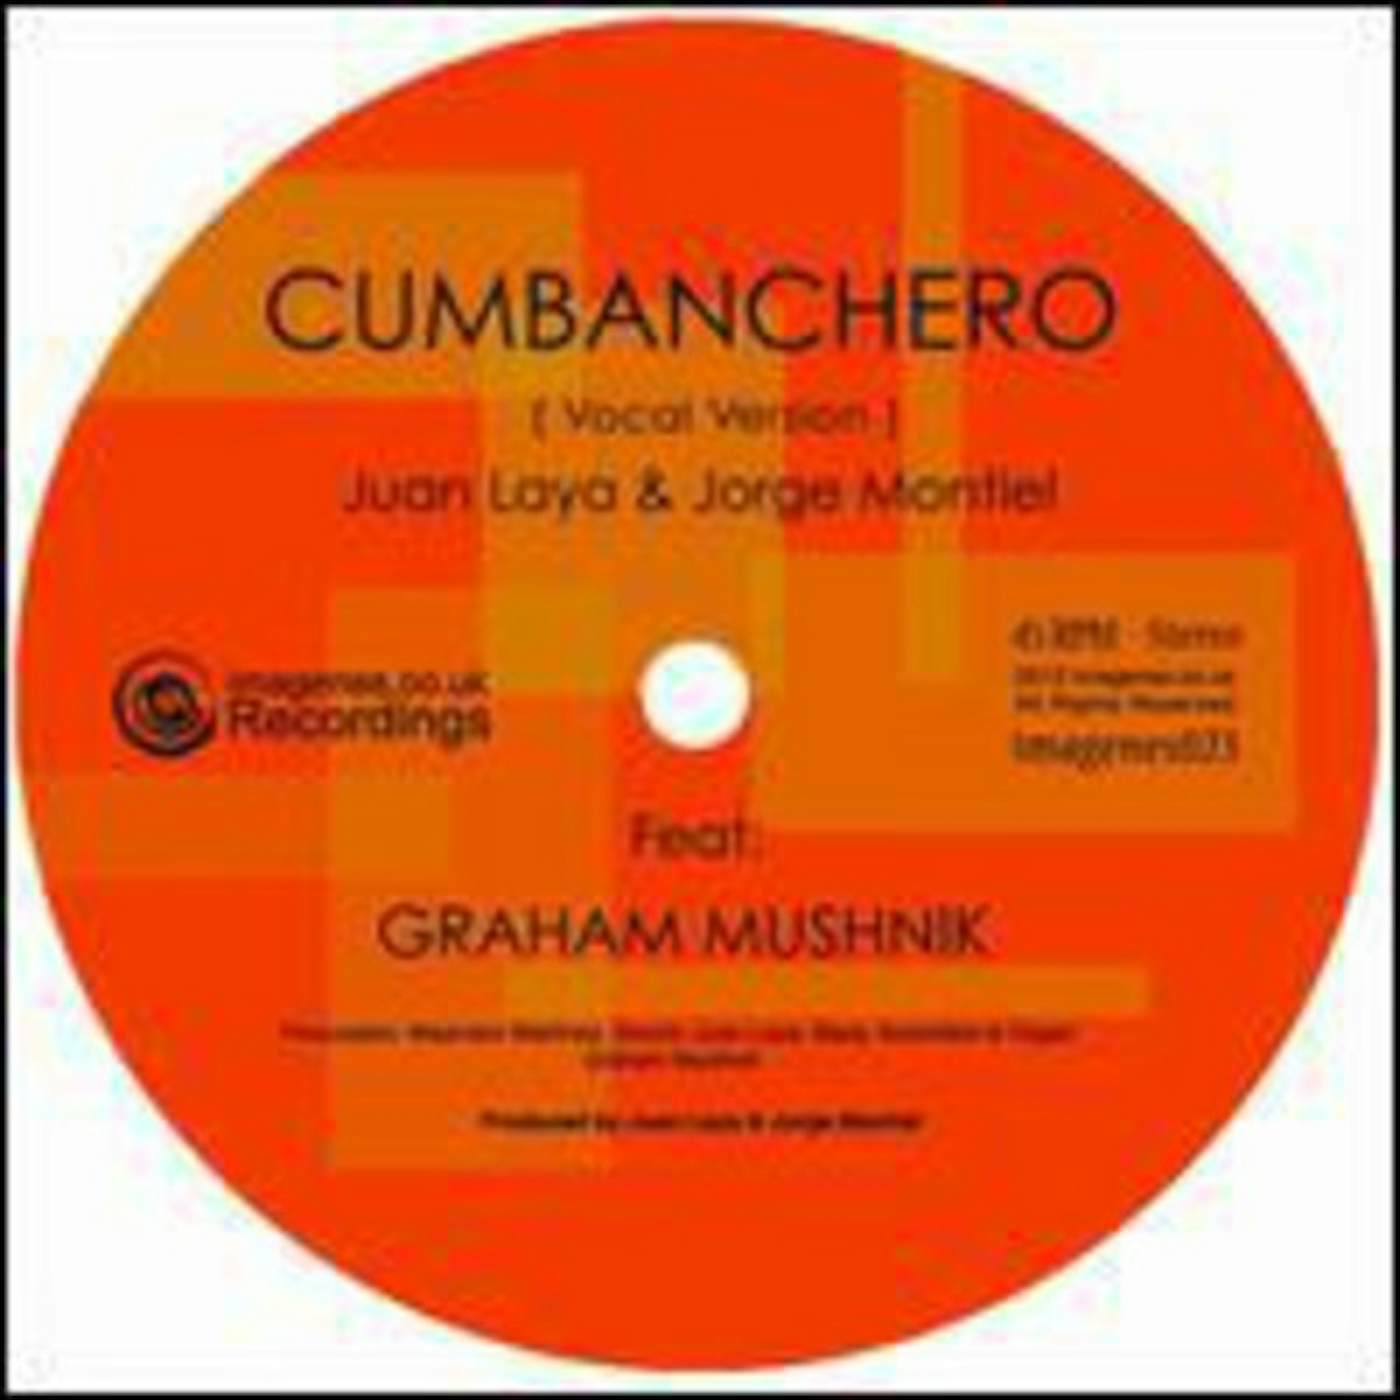 Juan Laya & Jorge Montiel Cumbanchero Vinyl Record